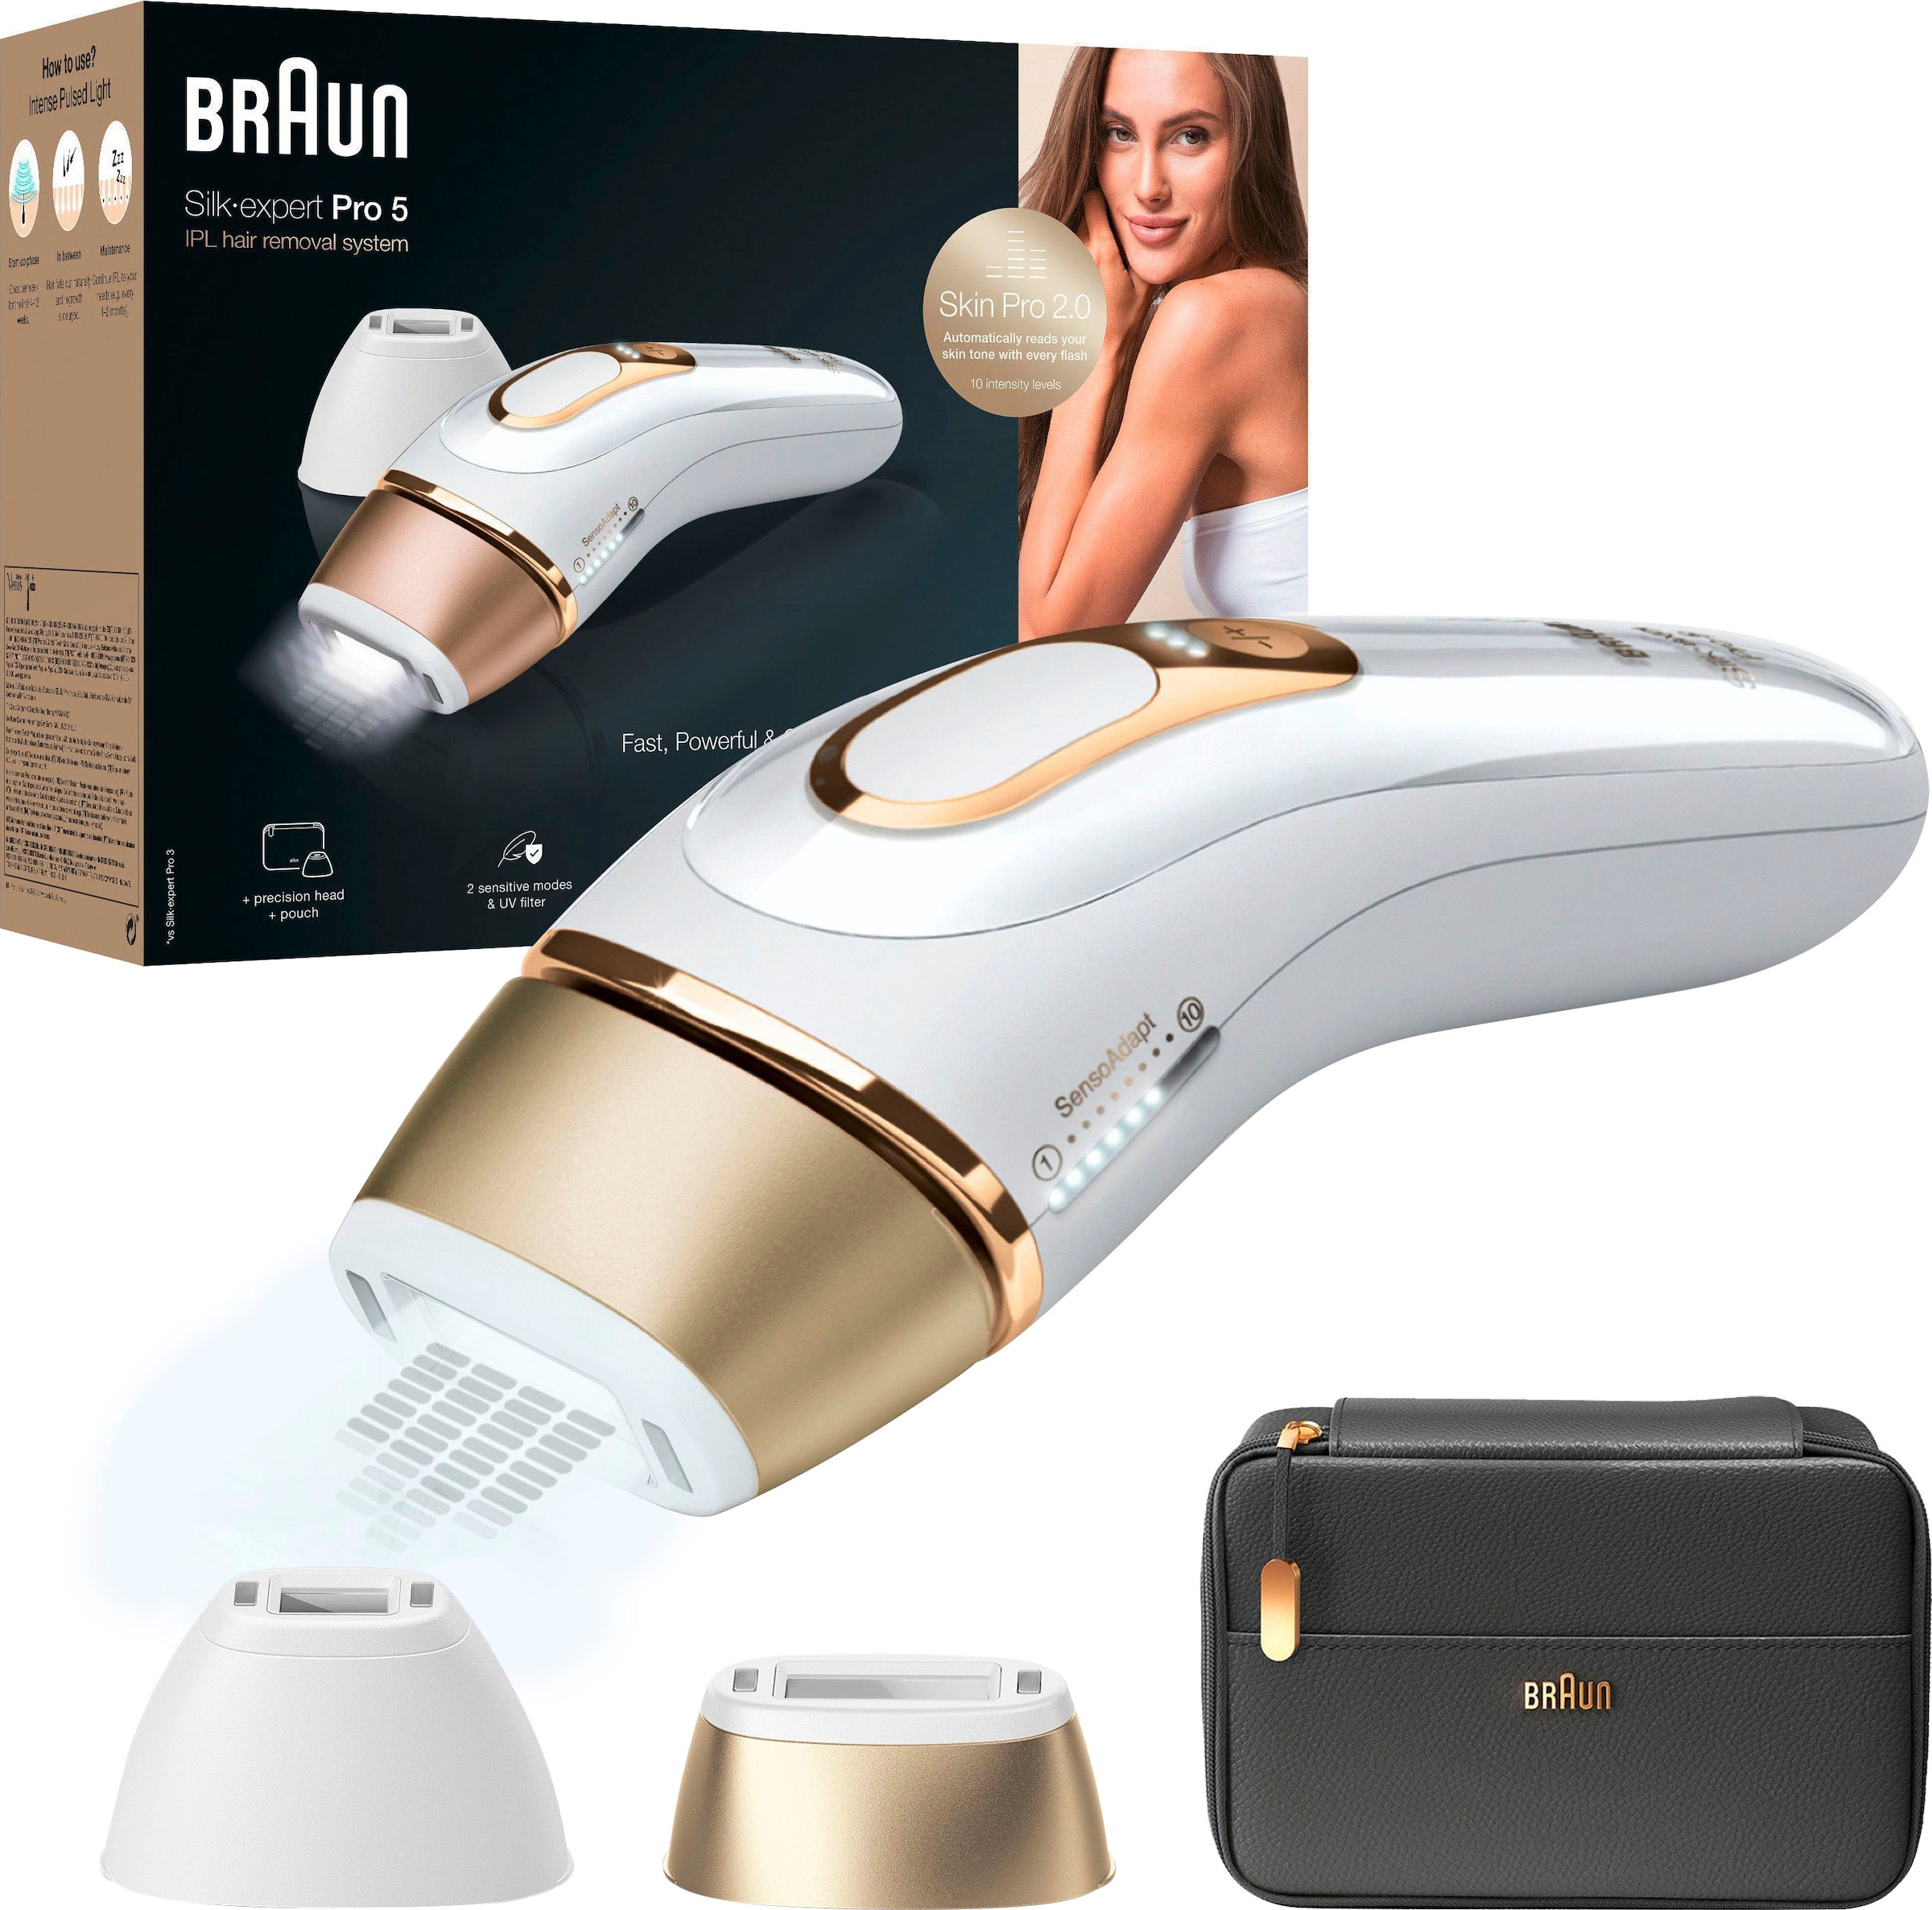 Braun im Pro IPL-Haarentferner Shop 2.0 PL5140«, Sensor Pro Skin IPL ordern 400.000 Jelmoli-Online ❤ »Silk-expert Lichtimpulse,